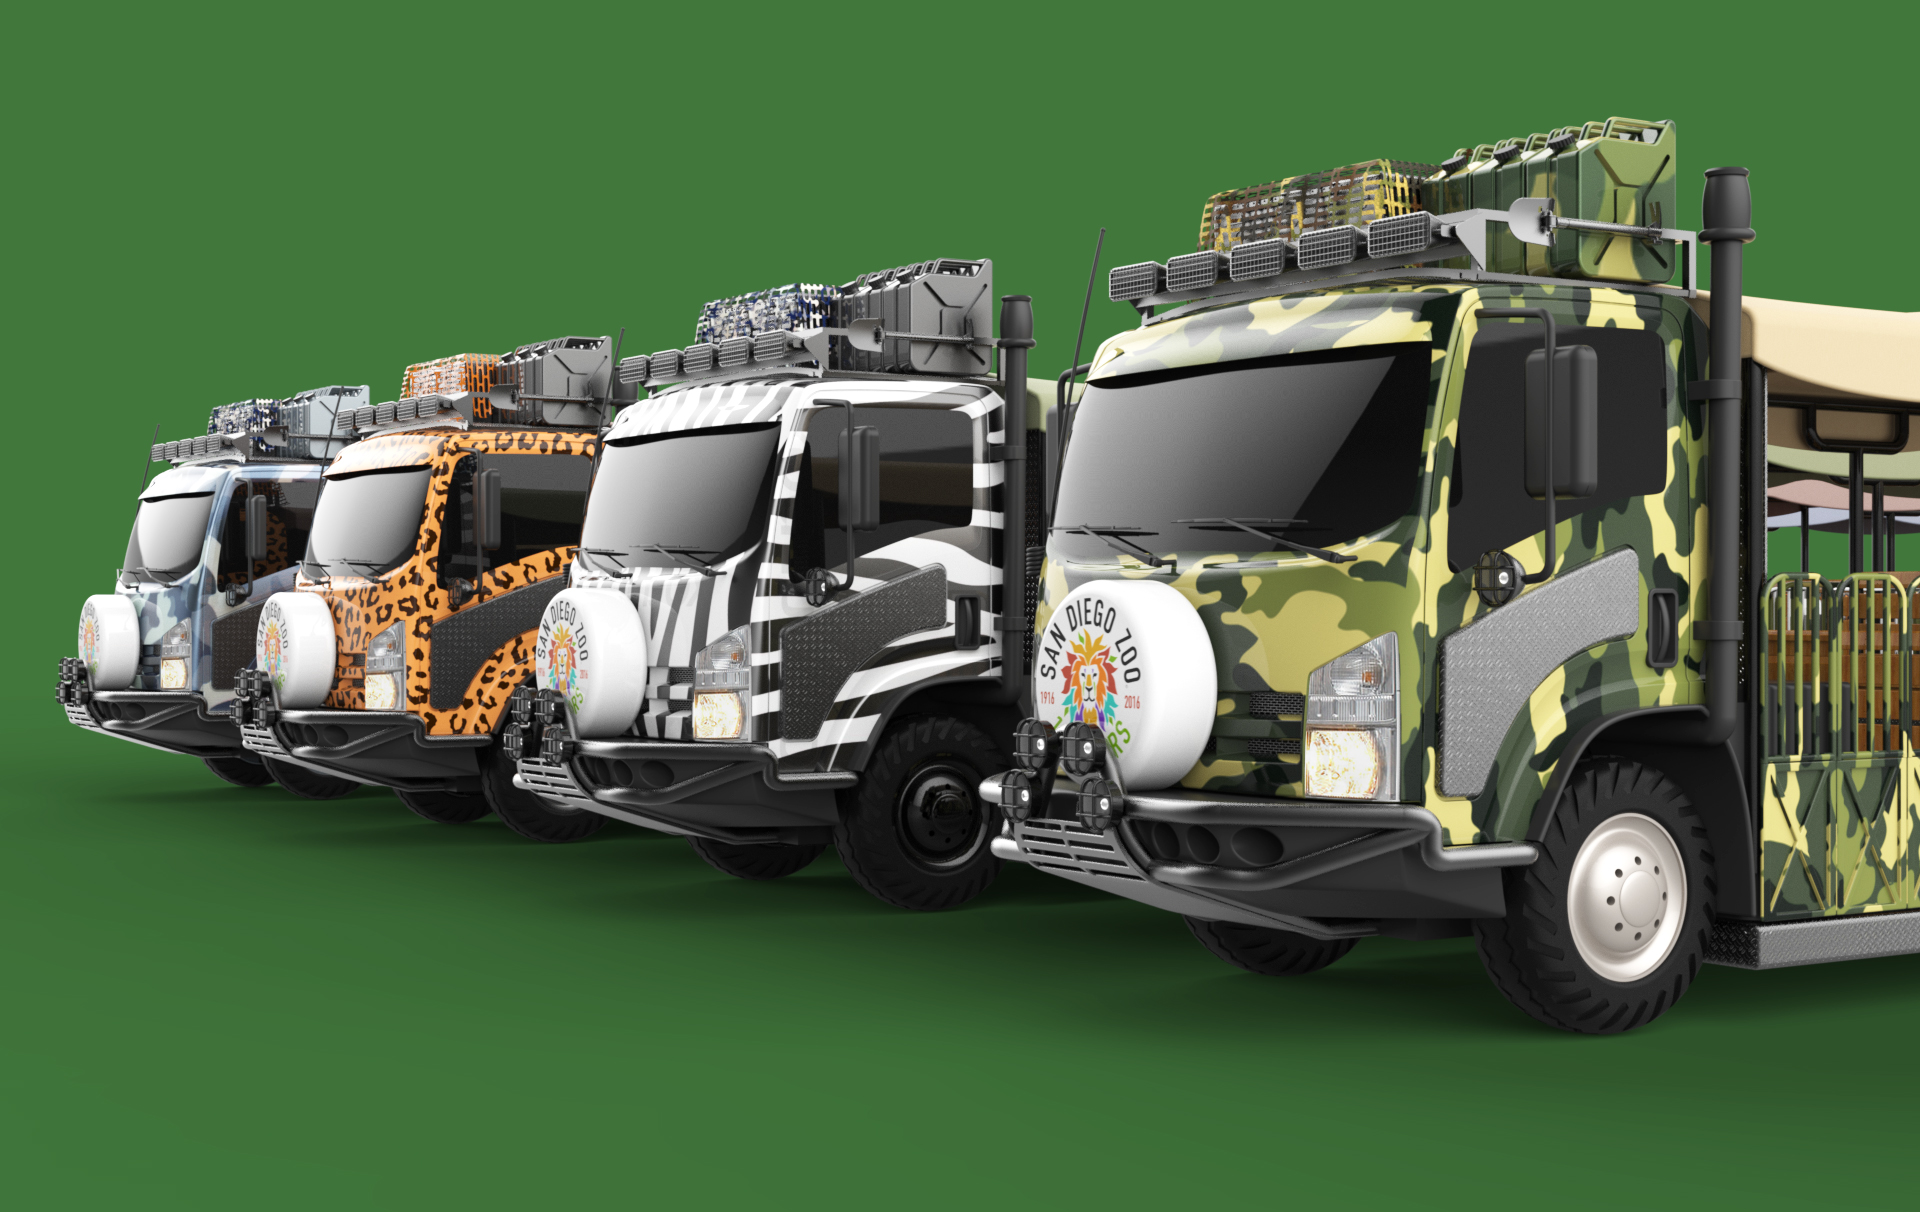 Safari theme livery on rendered vehicles